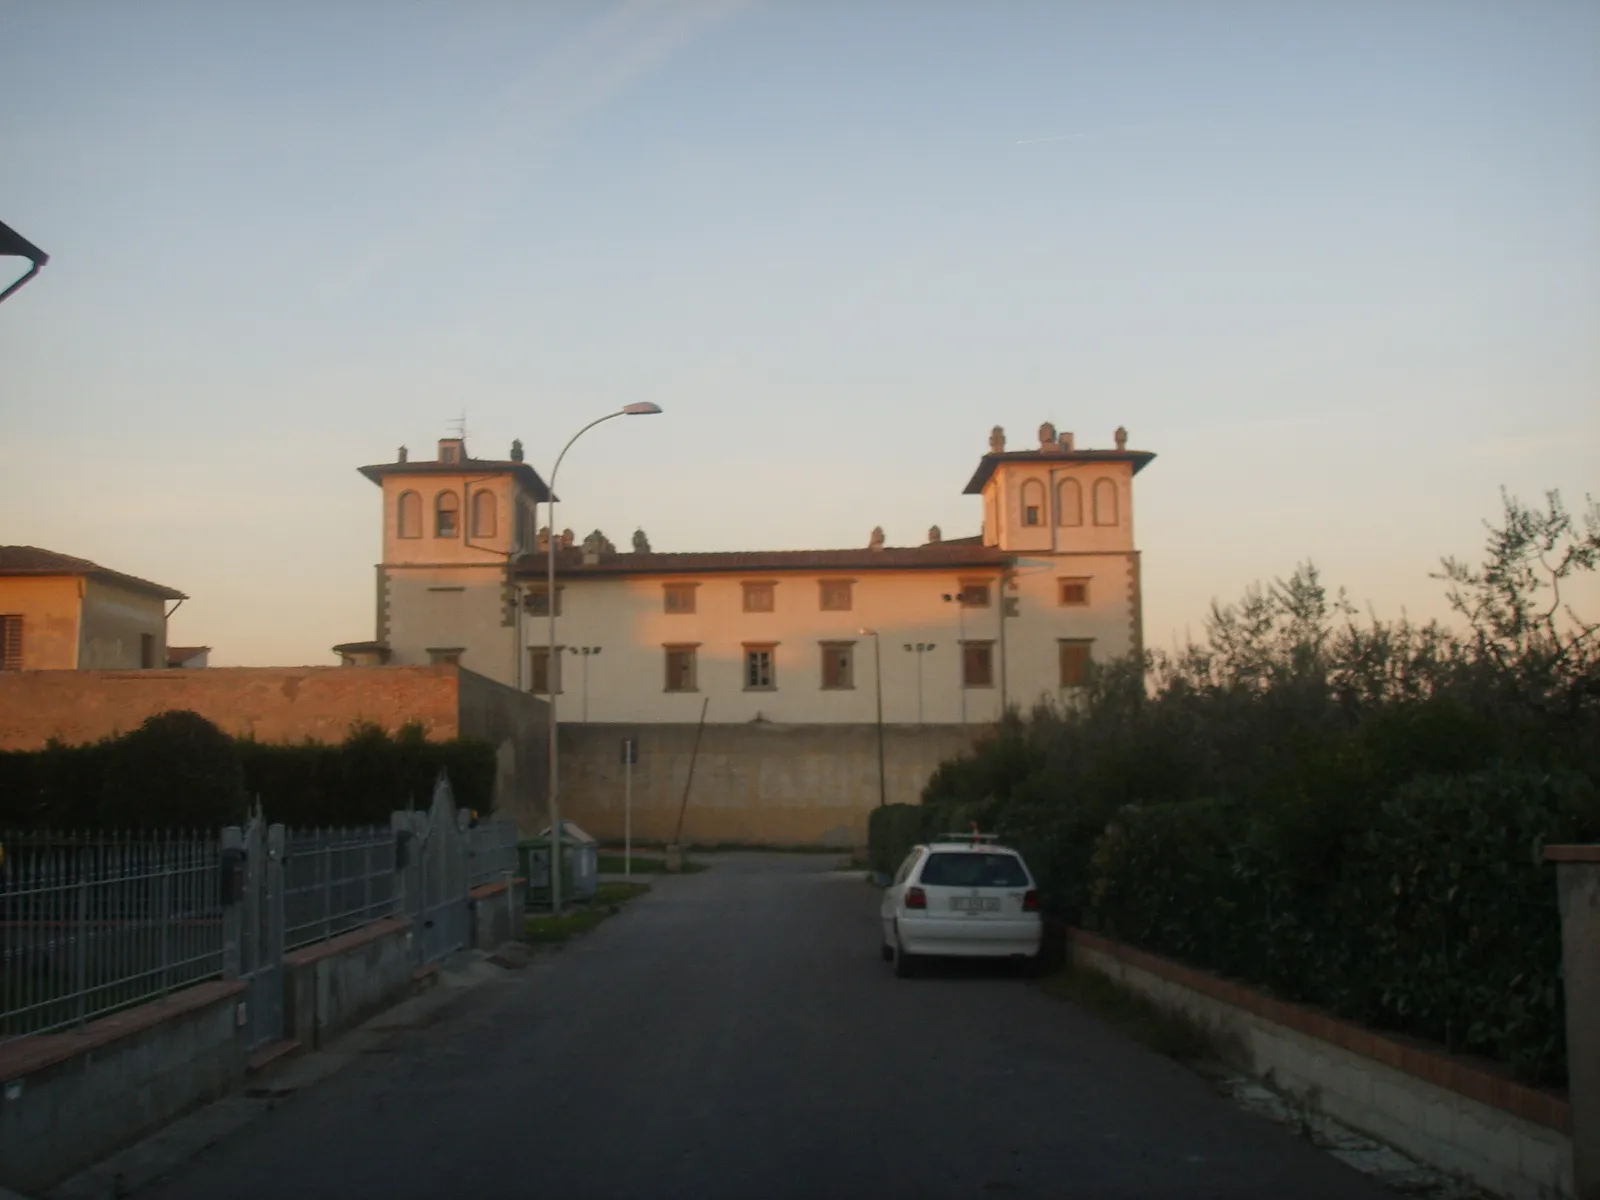 Photo showing: Montelupo_-_Villa_dell'Ambrogiana

Medici's Villa in Montelupo